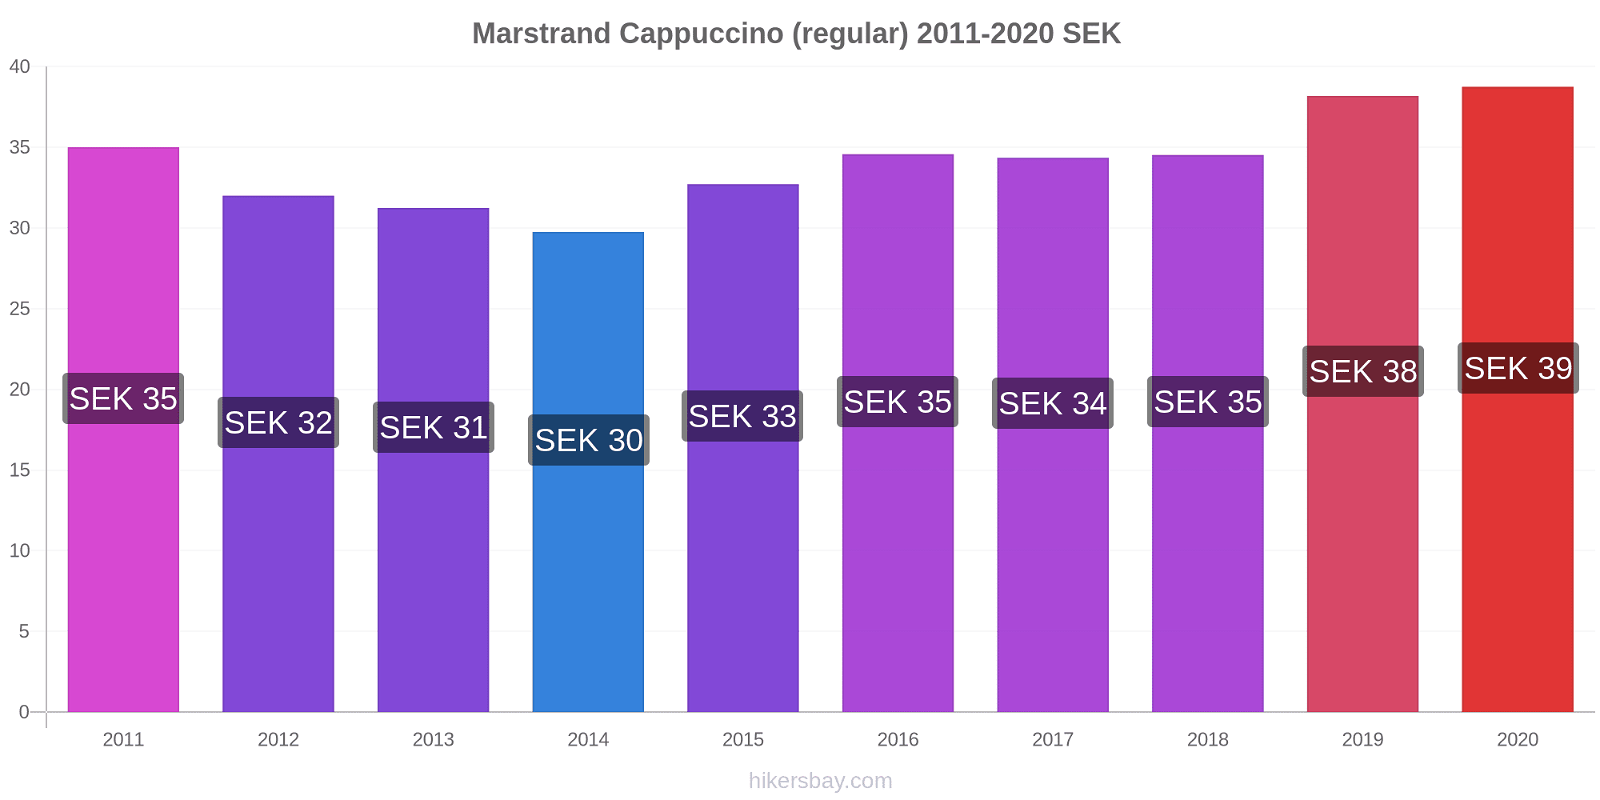 Marstrand price changes Cappuccino (regular) hikersbay.com